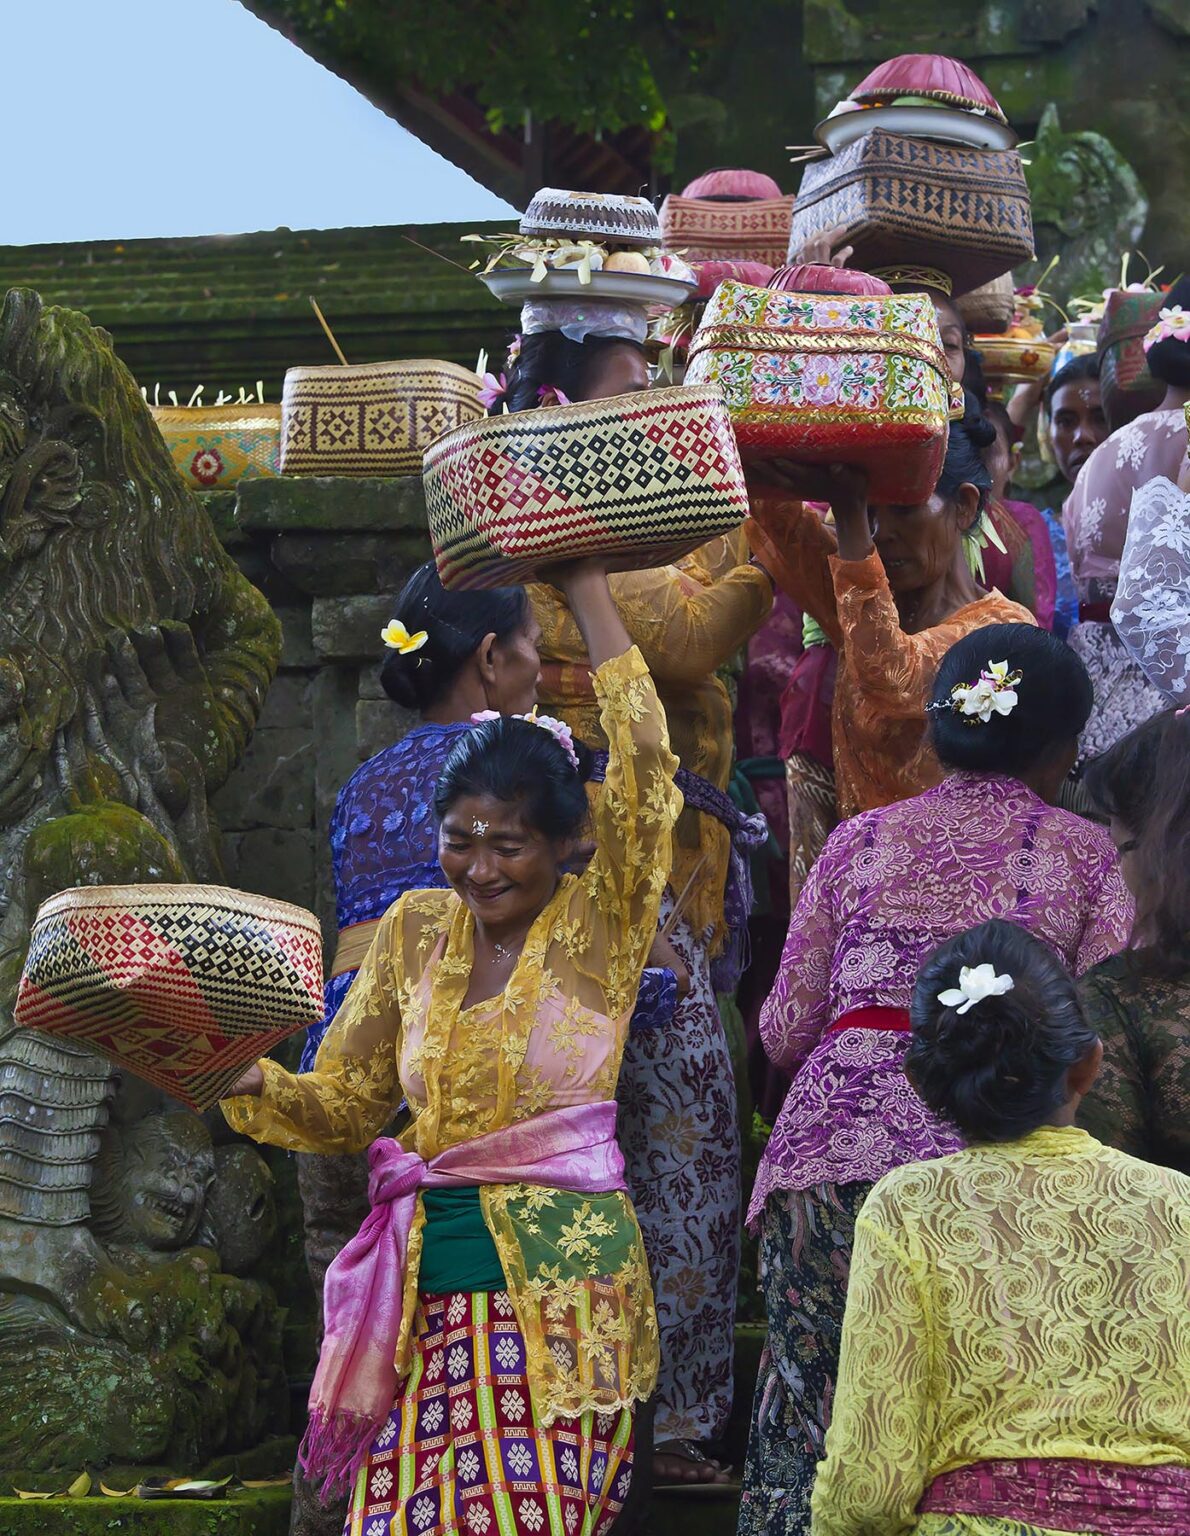 Hindu woman carry offerings balanced on their heads during the anniversary ceremony of PURA PRAJAPATI near UBUD - BENTUYUNG SAKTI, BALI